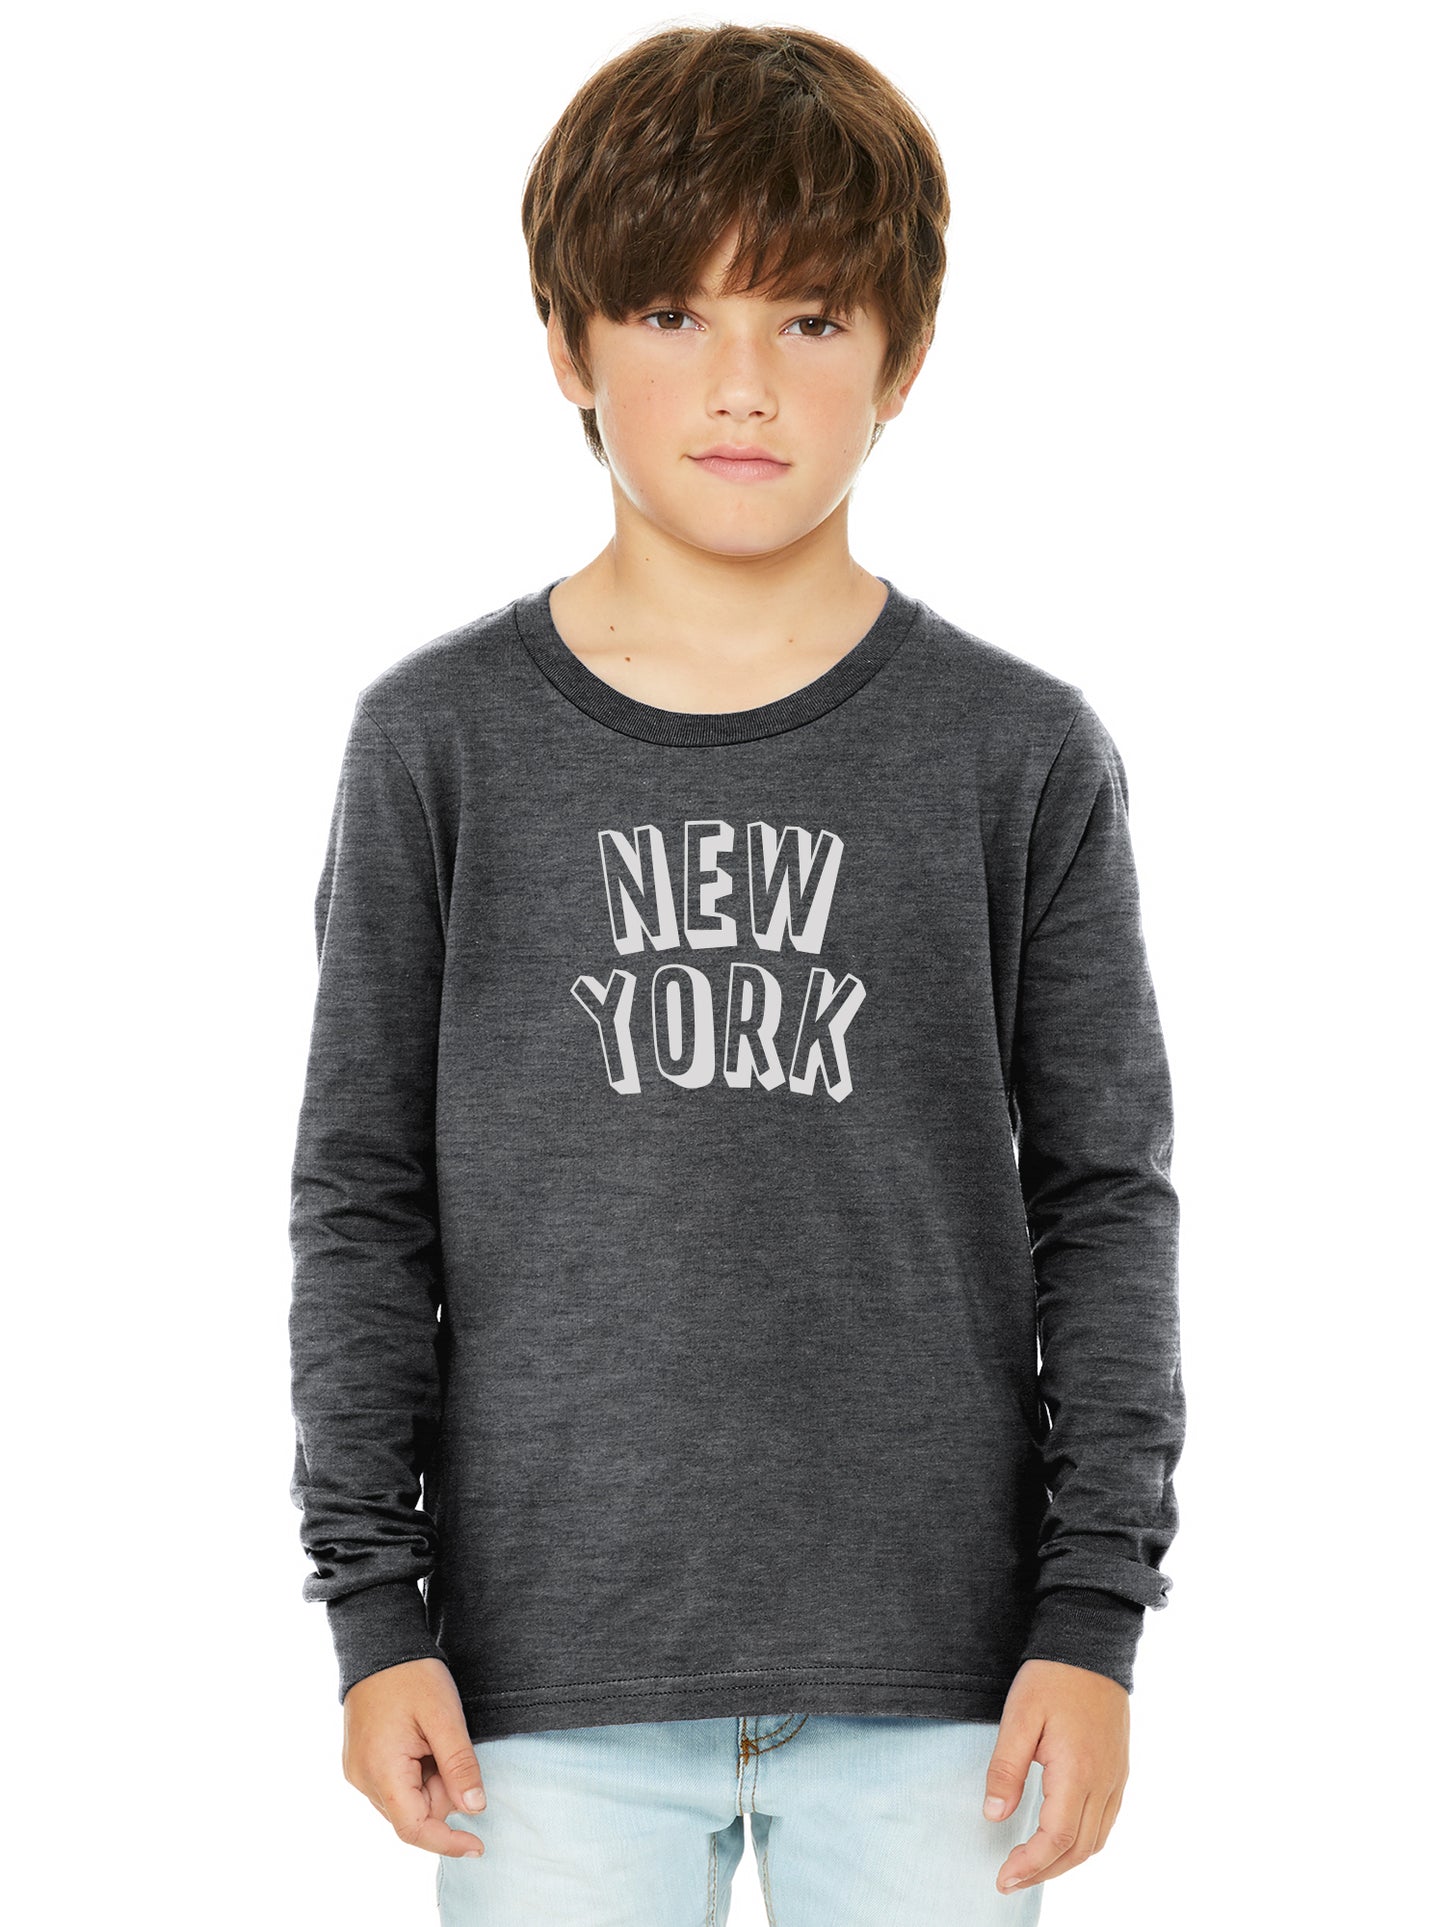 Daxton Youth Long Sleeve New York Basic Tshirt